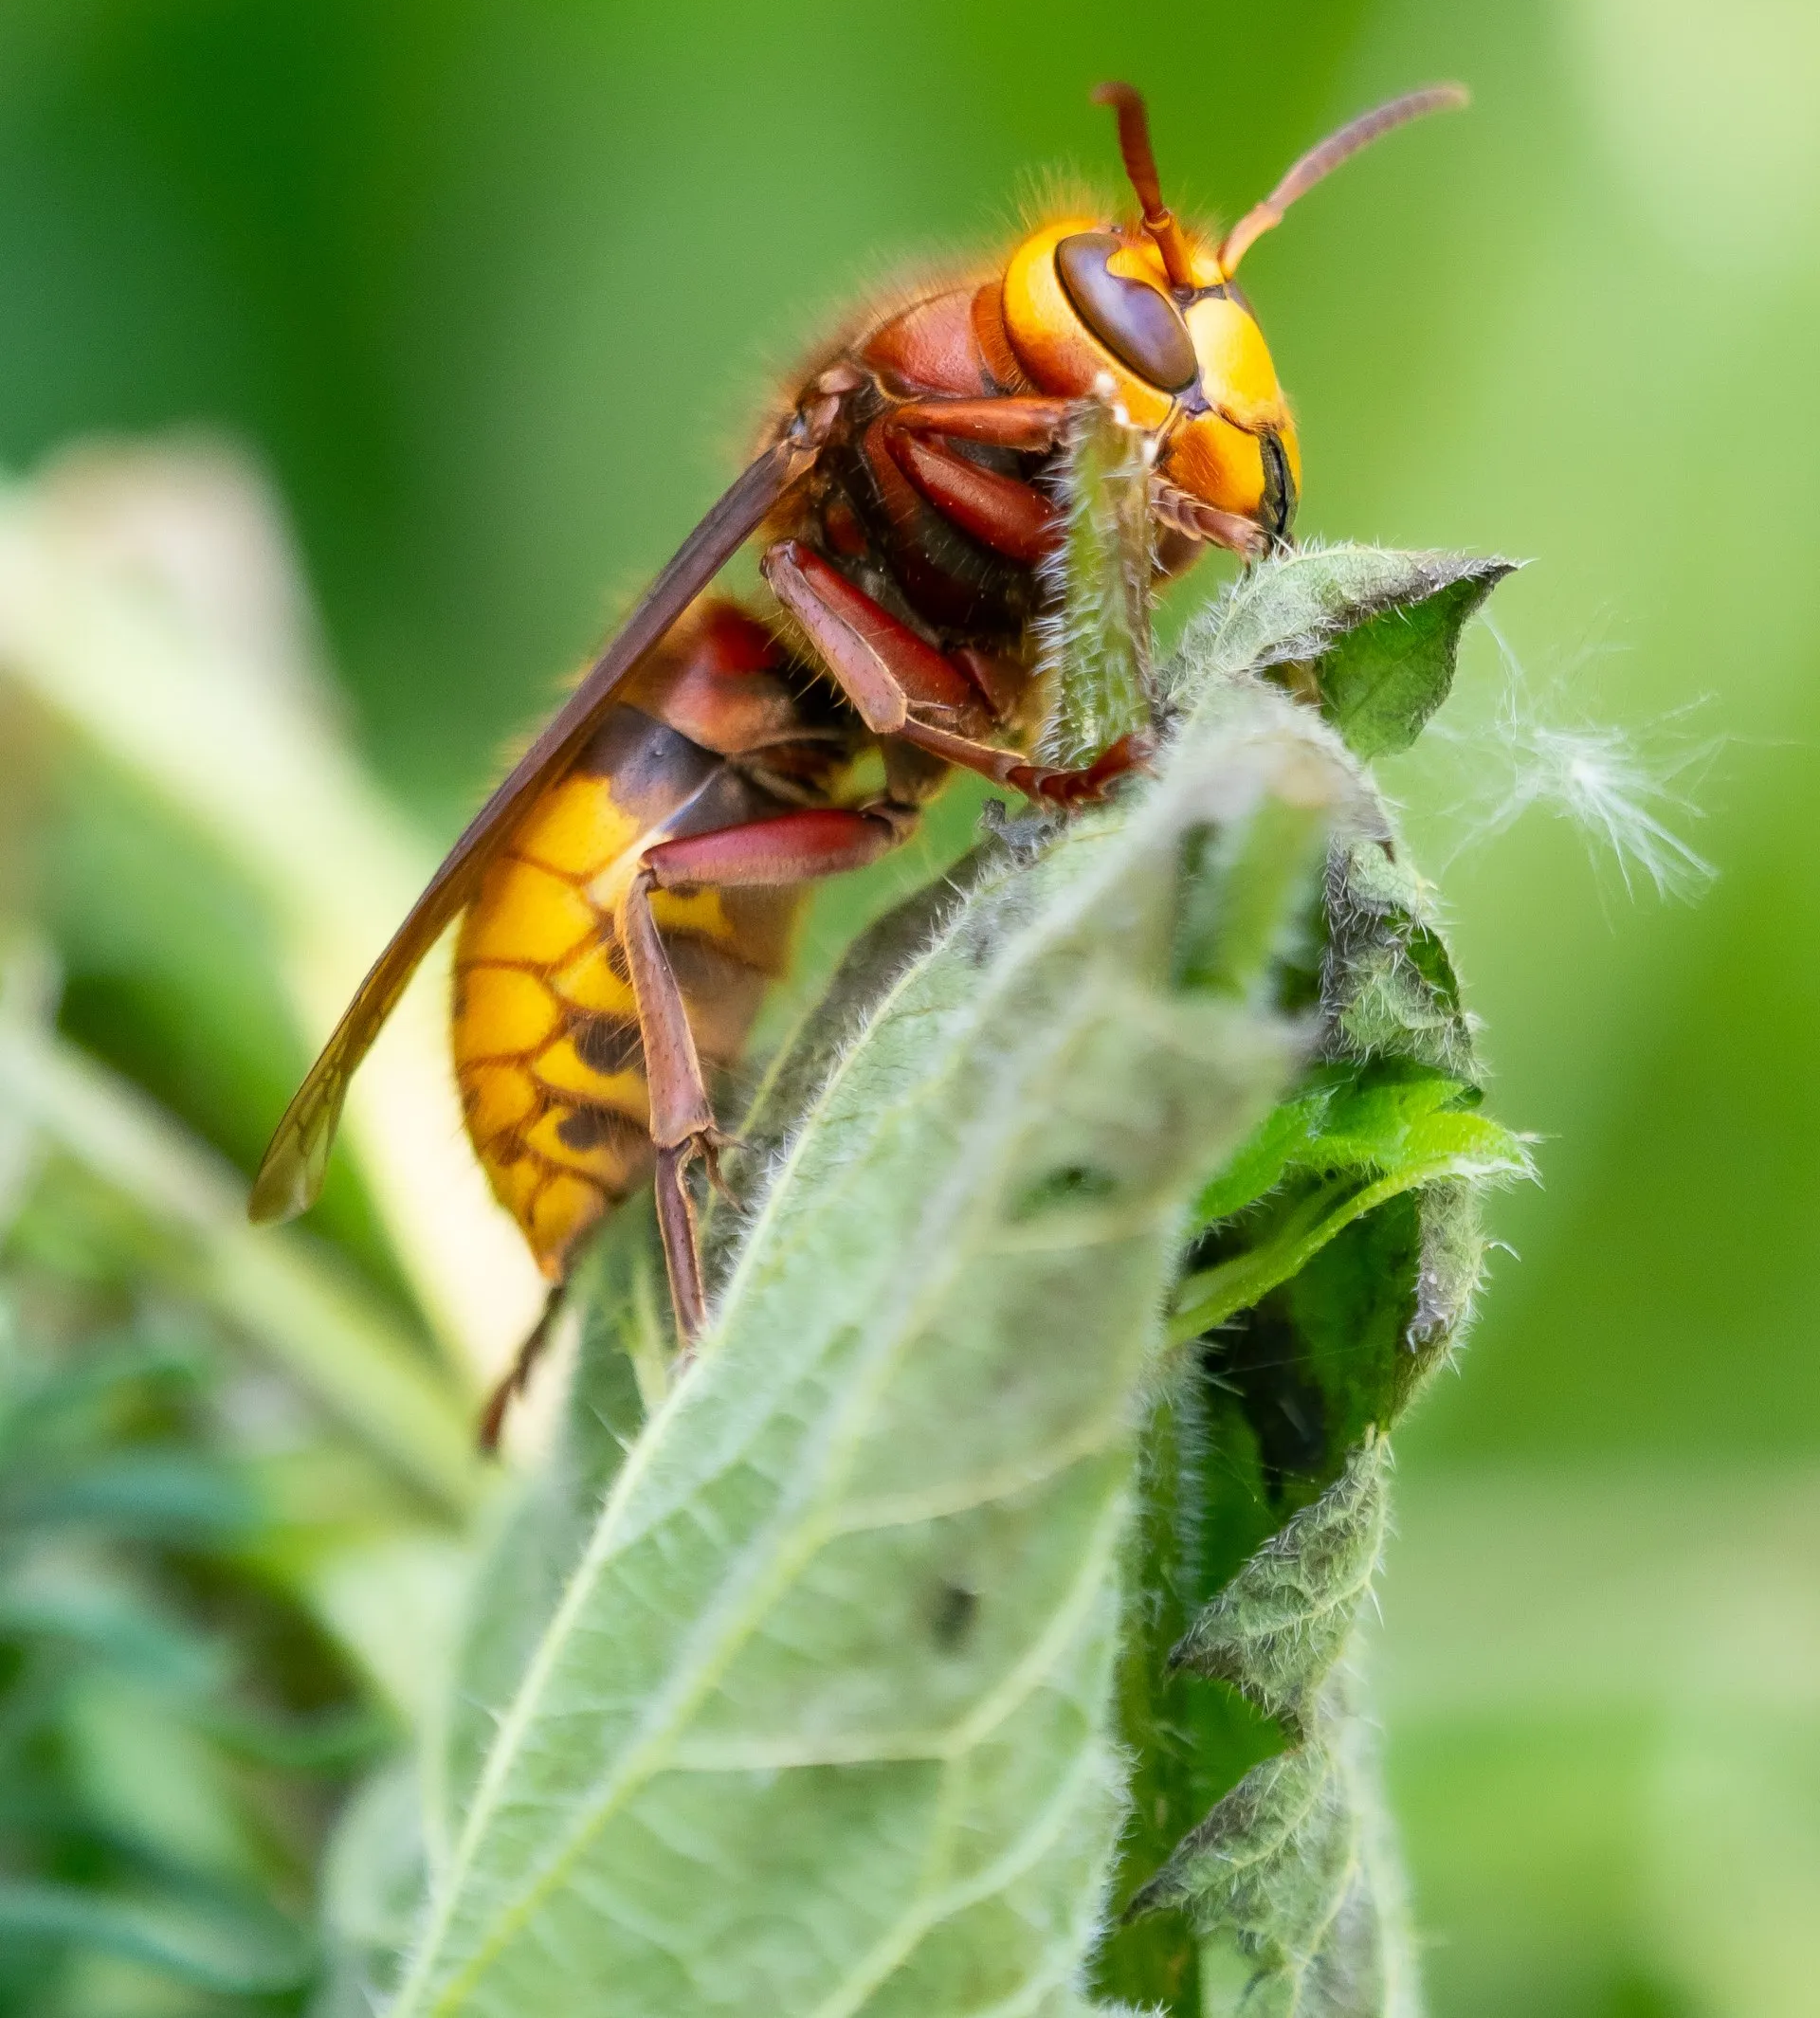 Large Hornet Wasp on Leaf | Bellingham, WA | Environmental Pest Control